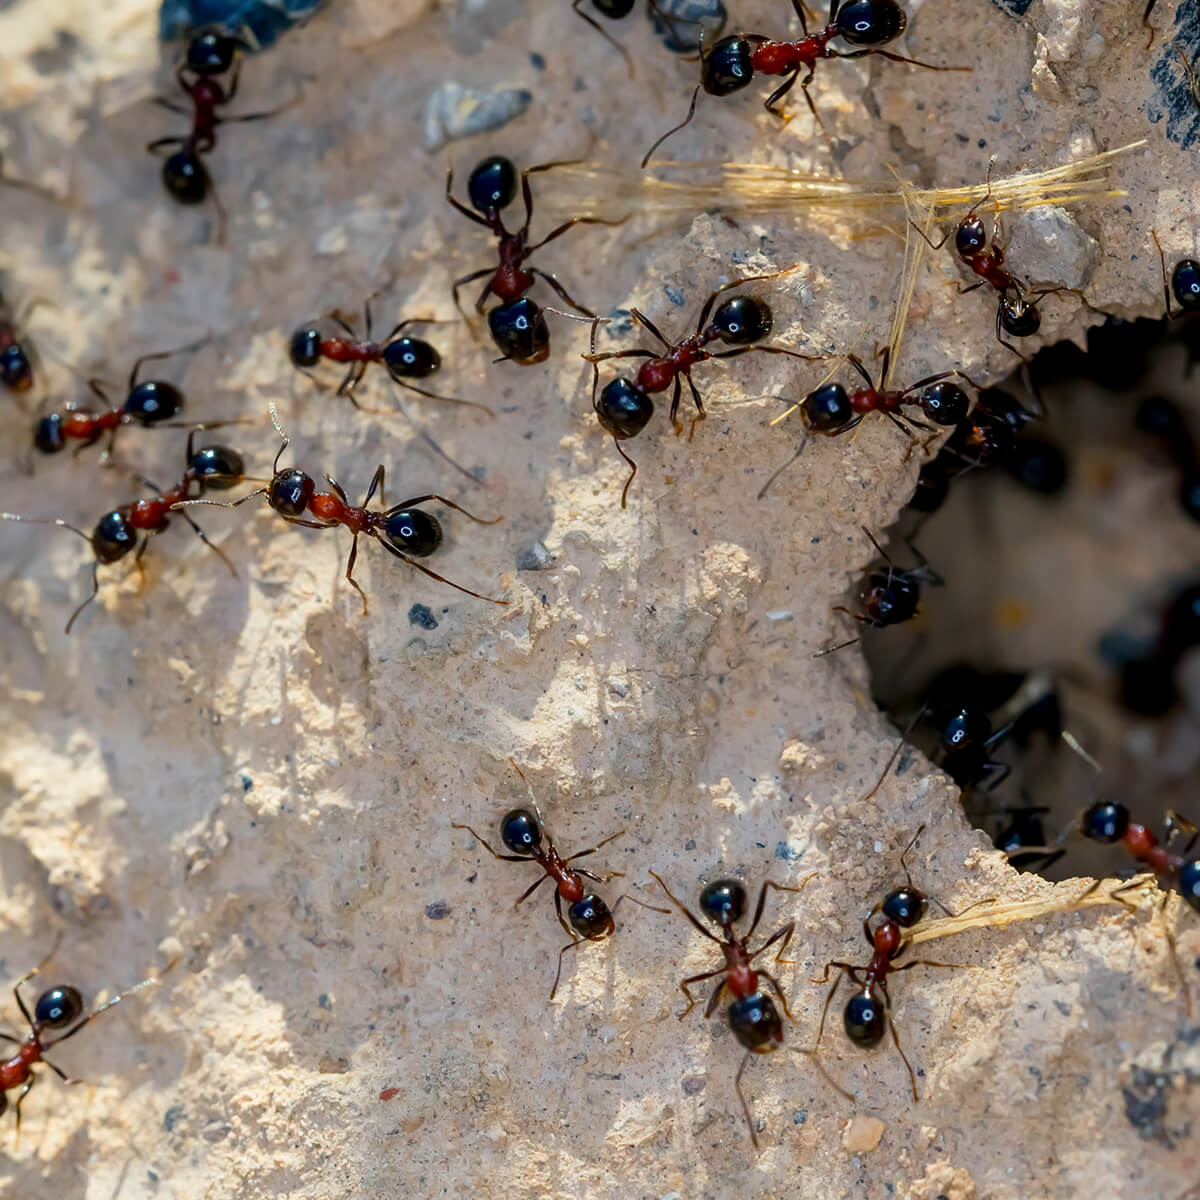 Meat ants